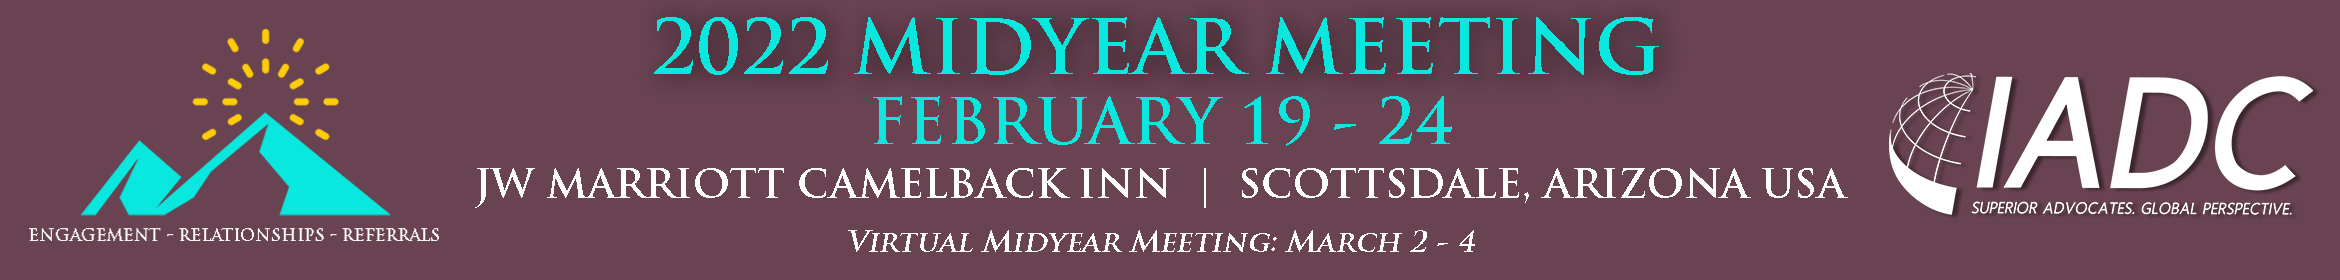 2022 Midyear Meeting Main banner